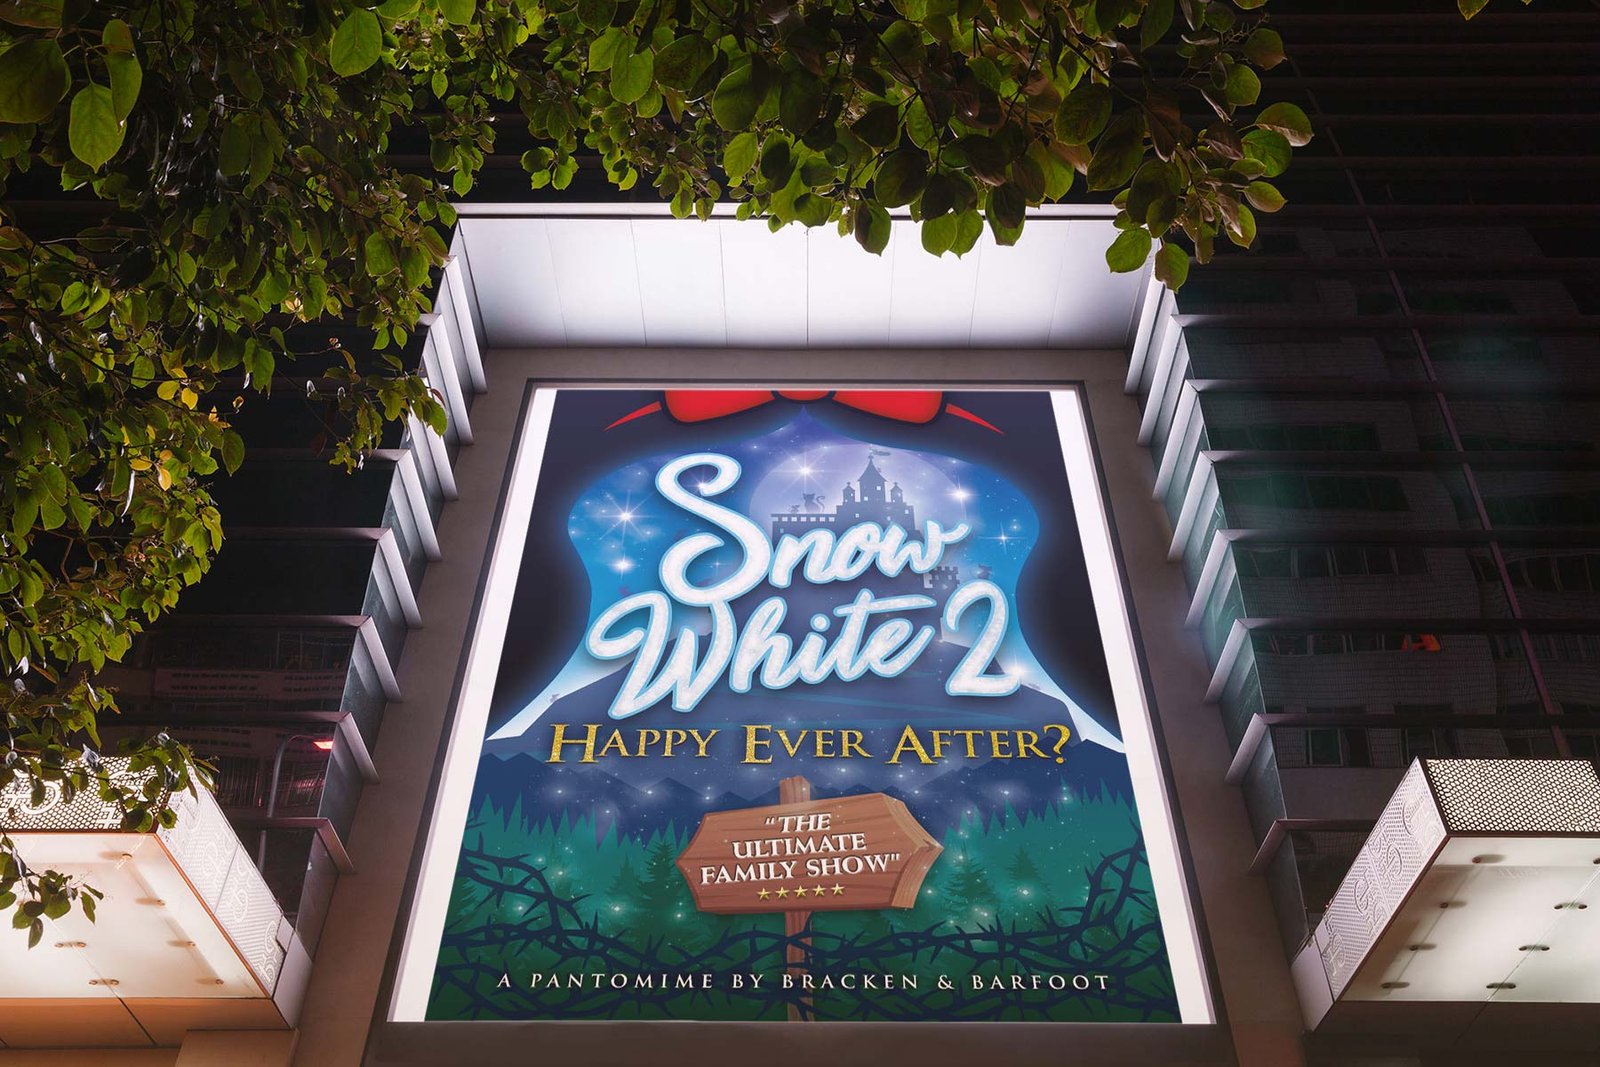 snow white 2 billboard flats